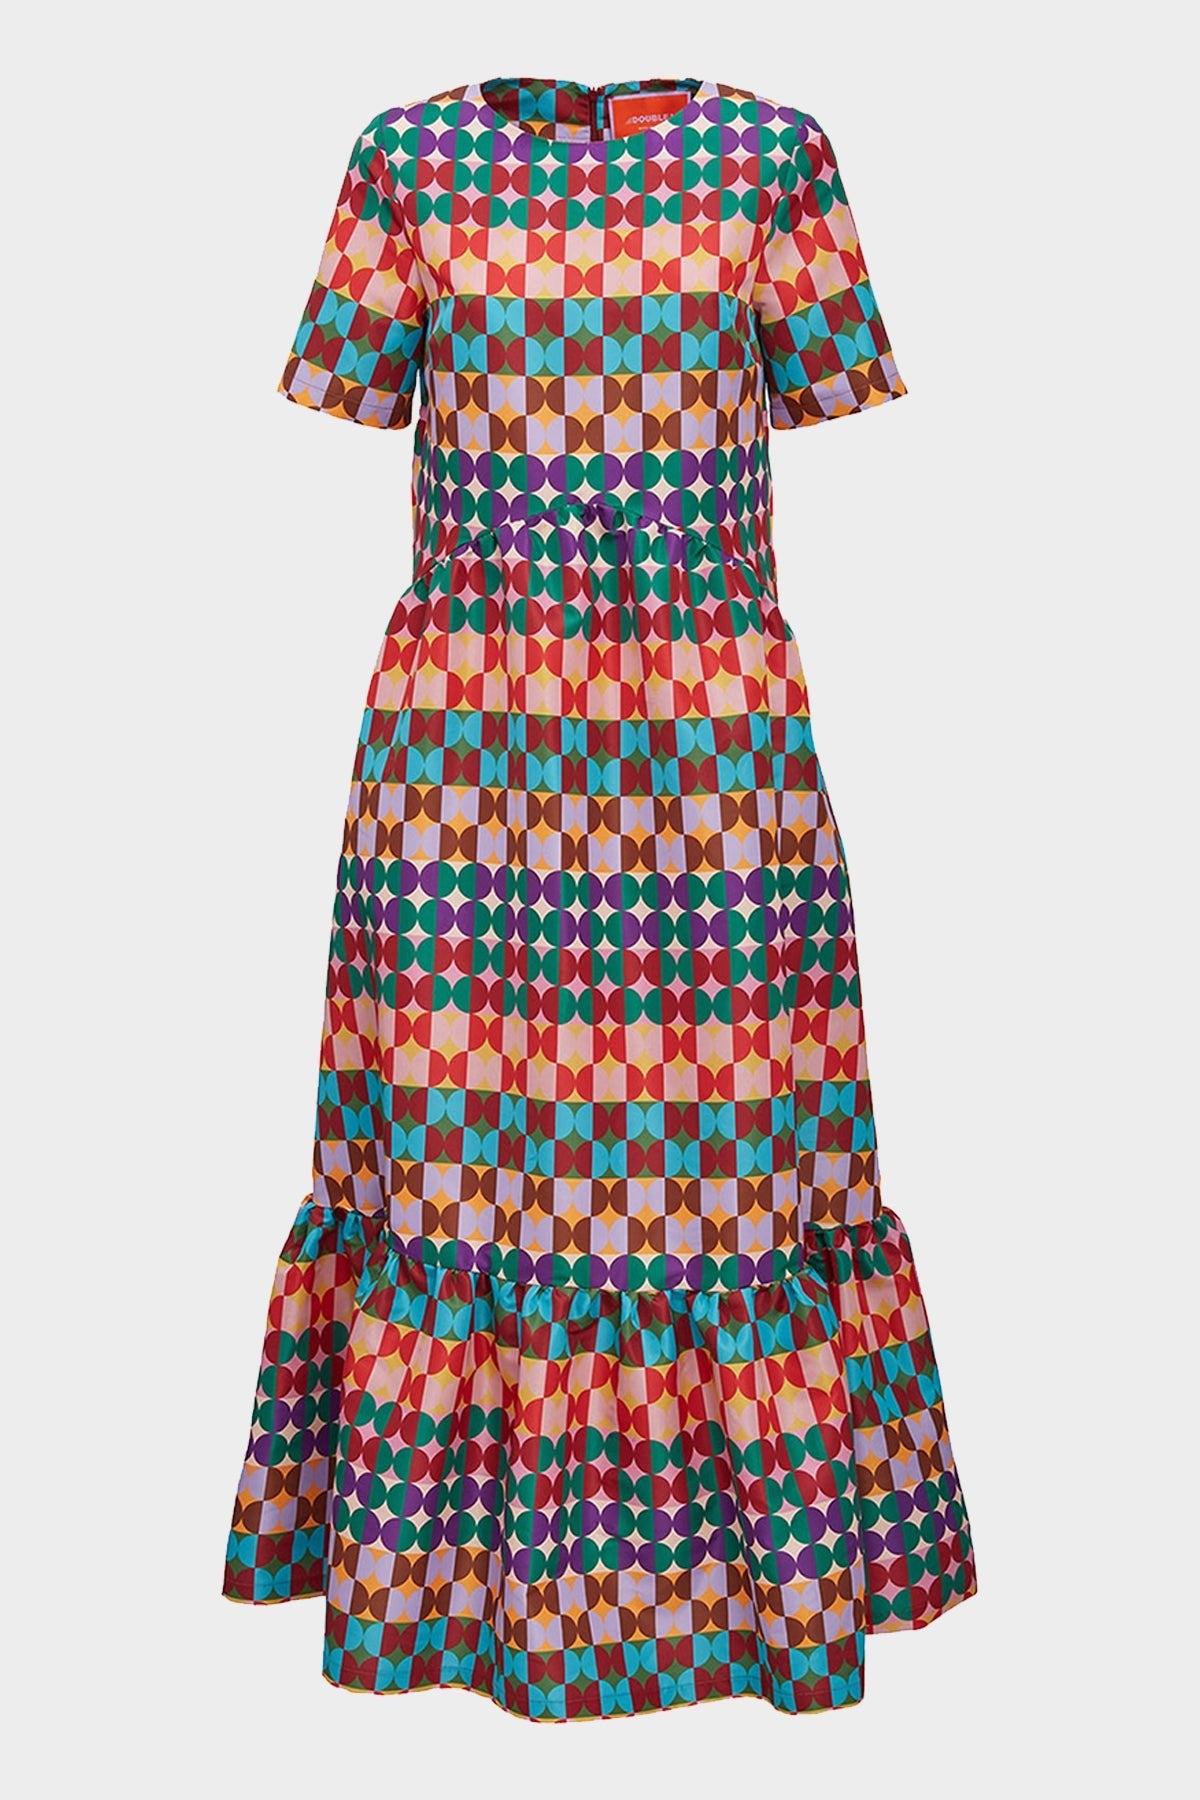 Belle Dress in Mezzaluna Rainbow - shop-olivia.com